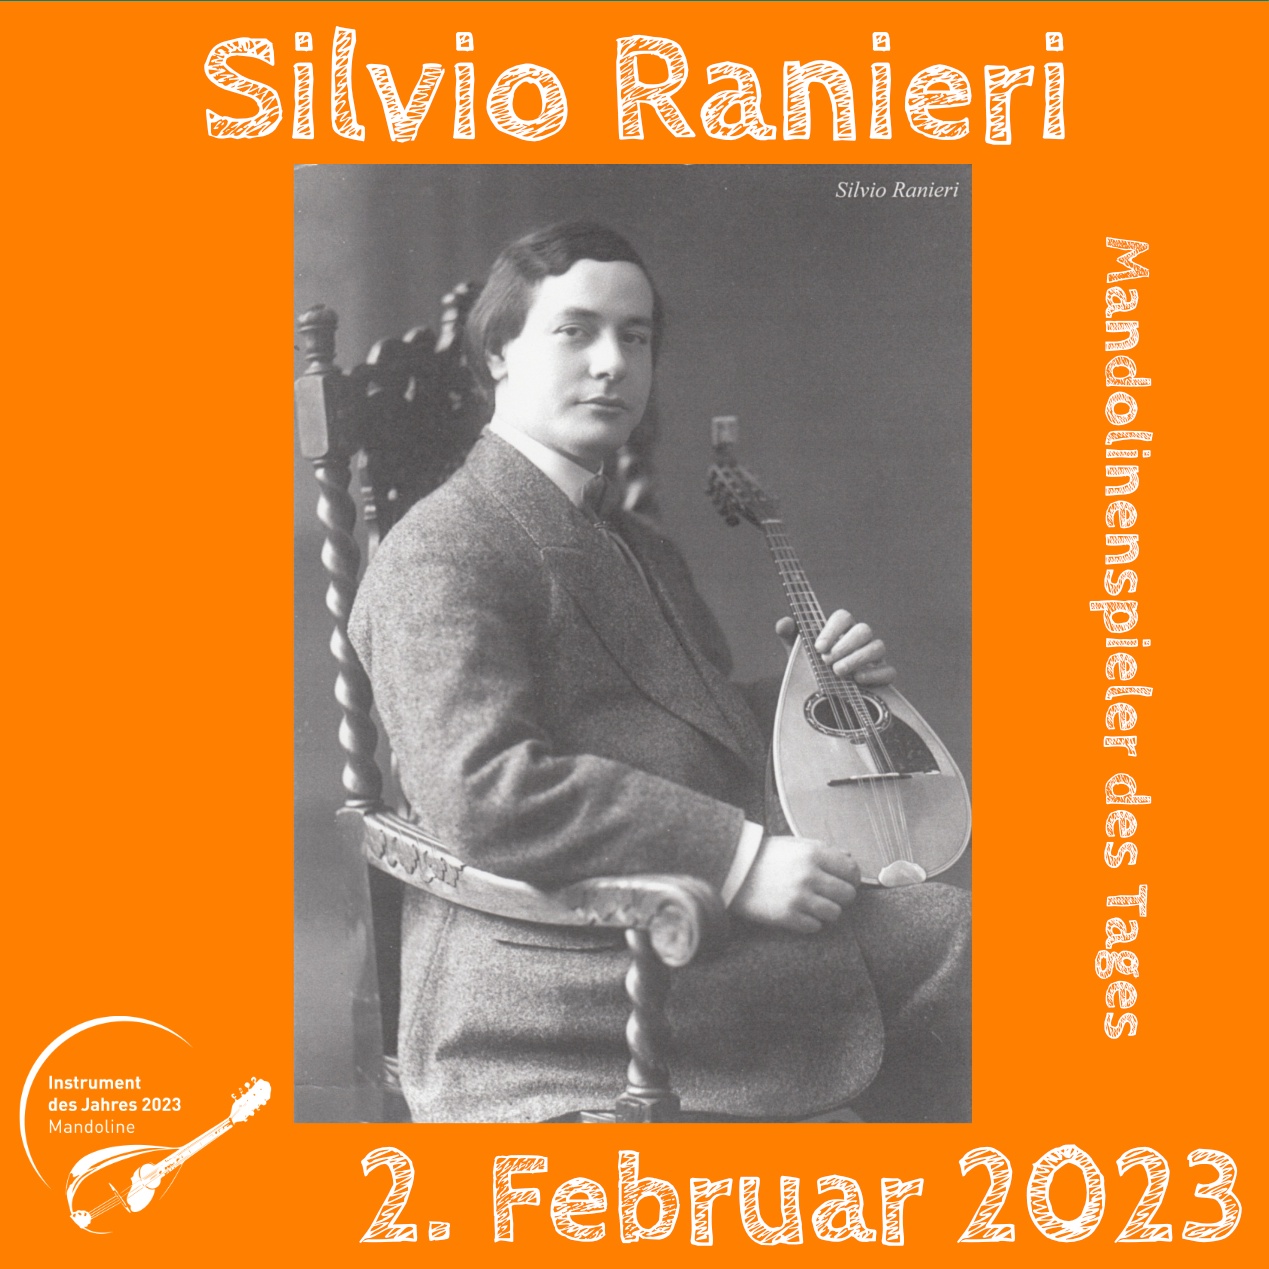 You are currently viewing 2. Februar – Silvio Ranieri